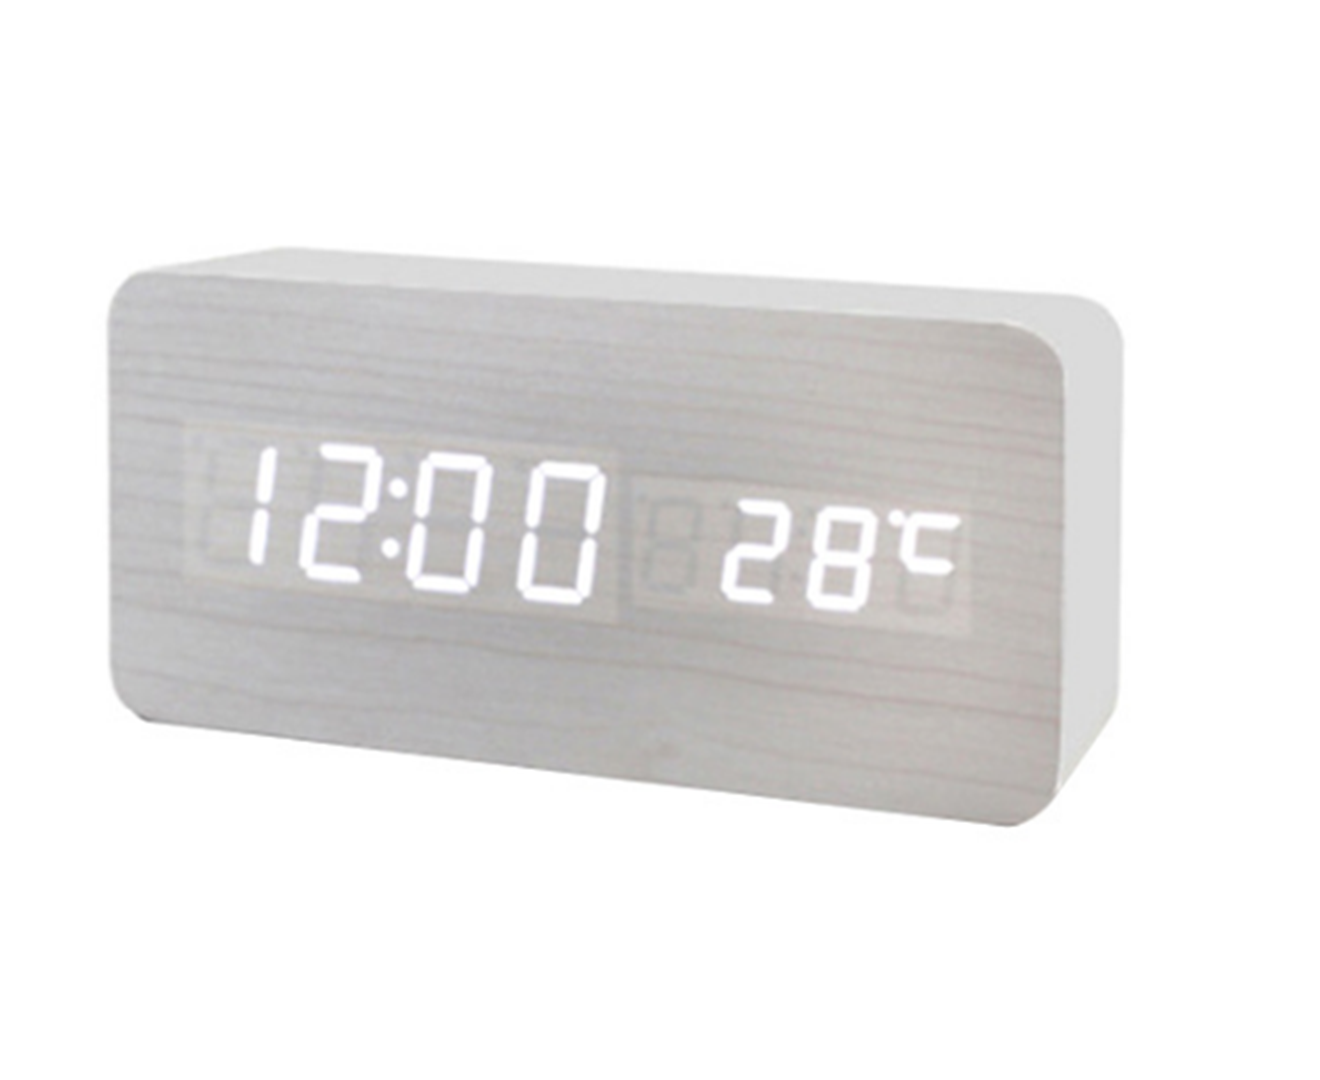  bianco Tfrdertuuigf creative LED sveglia temperatura elettronico orologio sveglia  